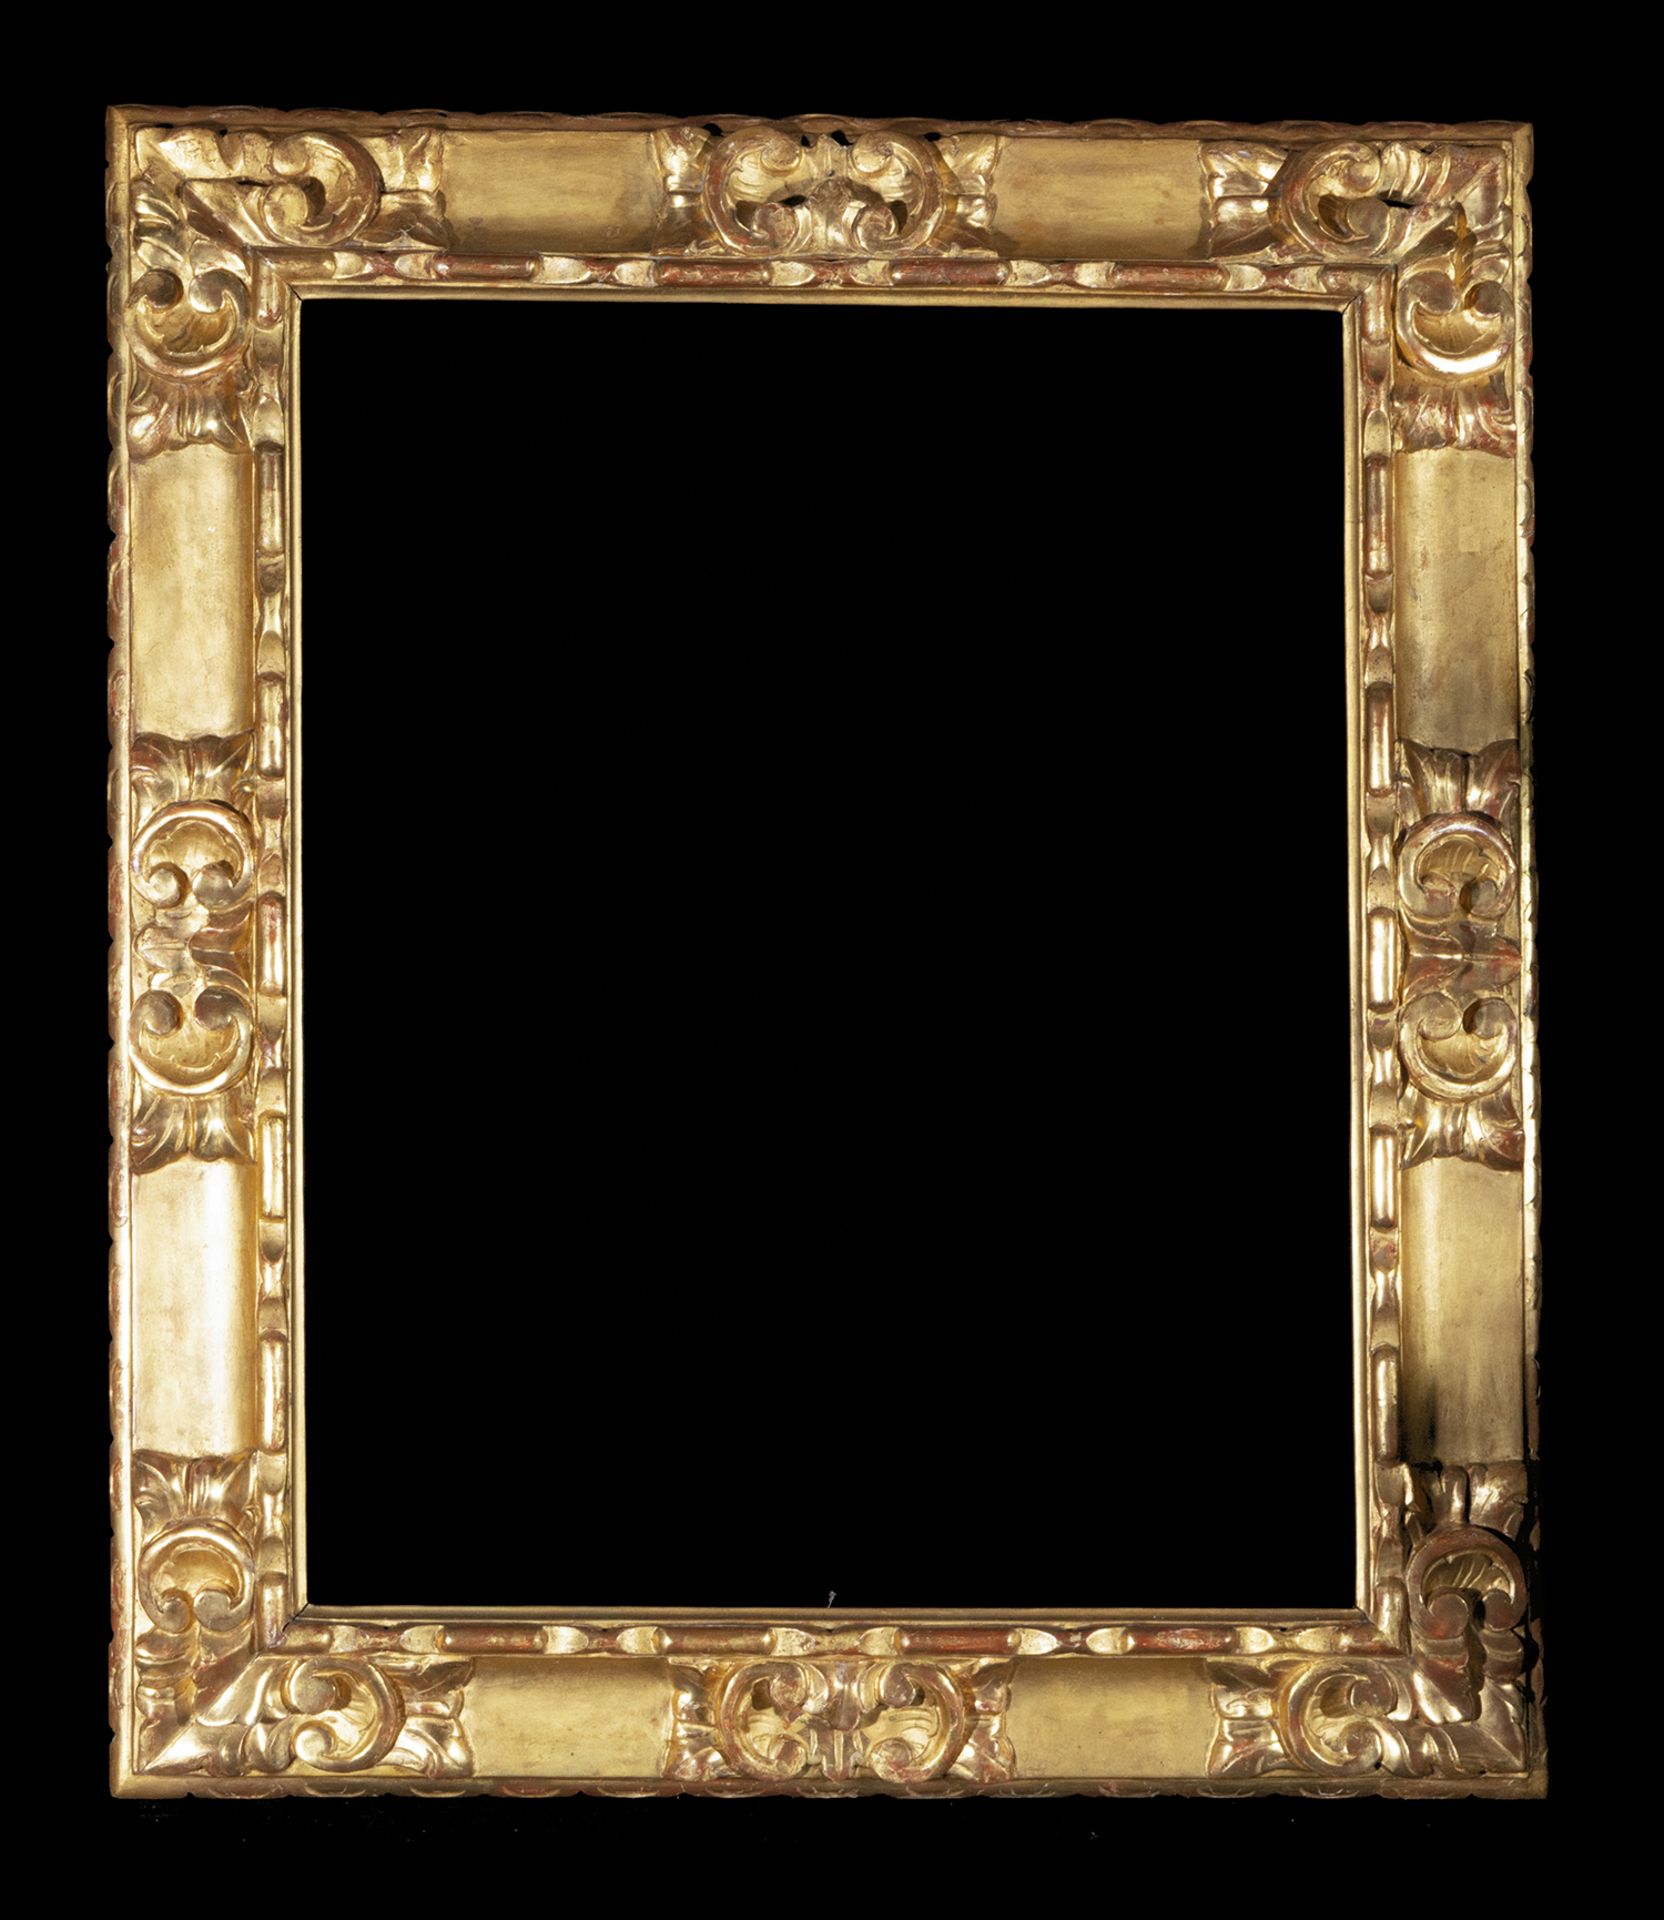 Elegant period Spanish Baroque frame, early 18th century